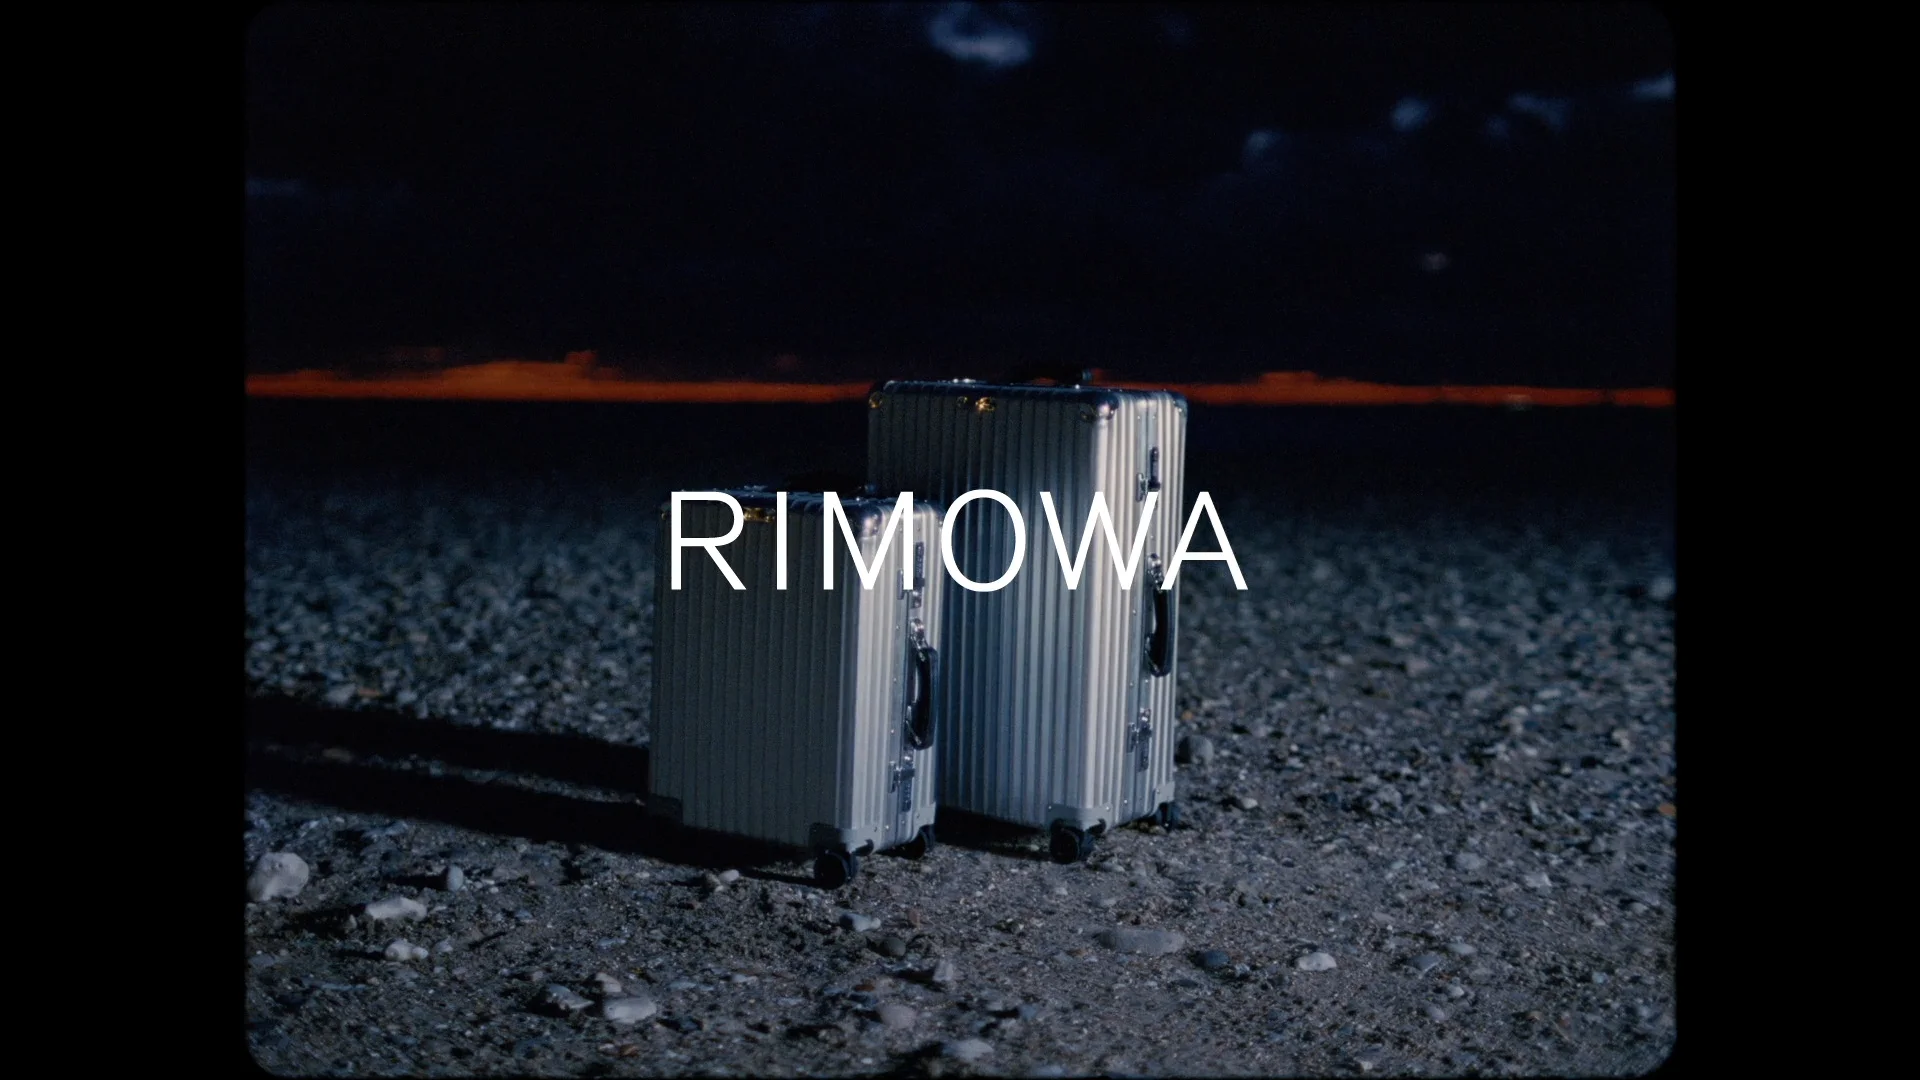 Brand Access featuring RIMOWA on Vimeo